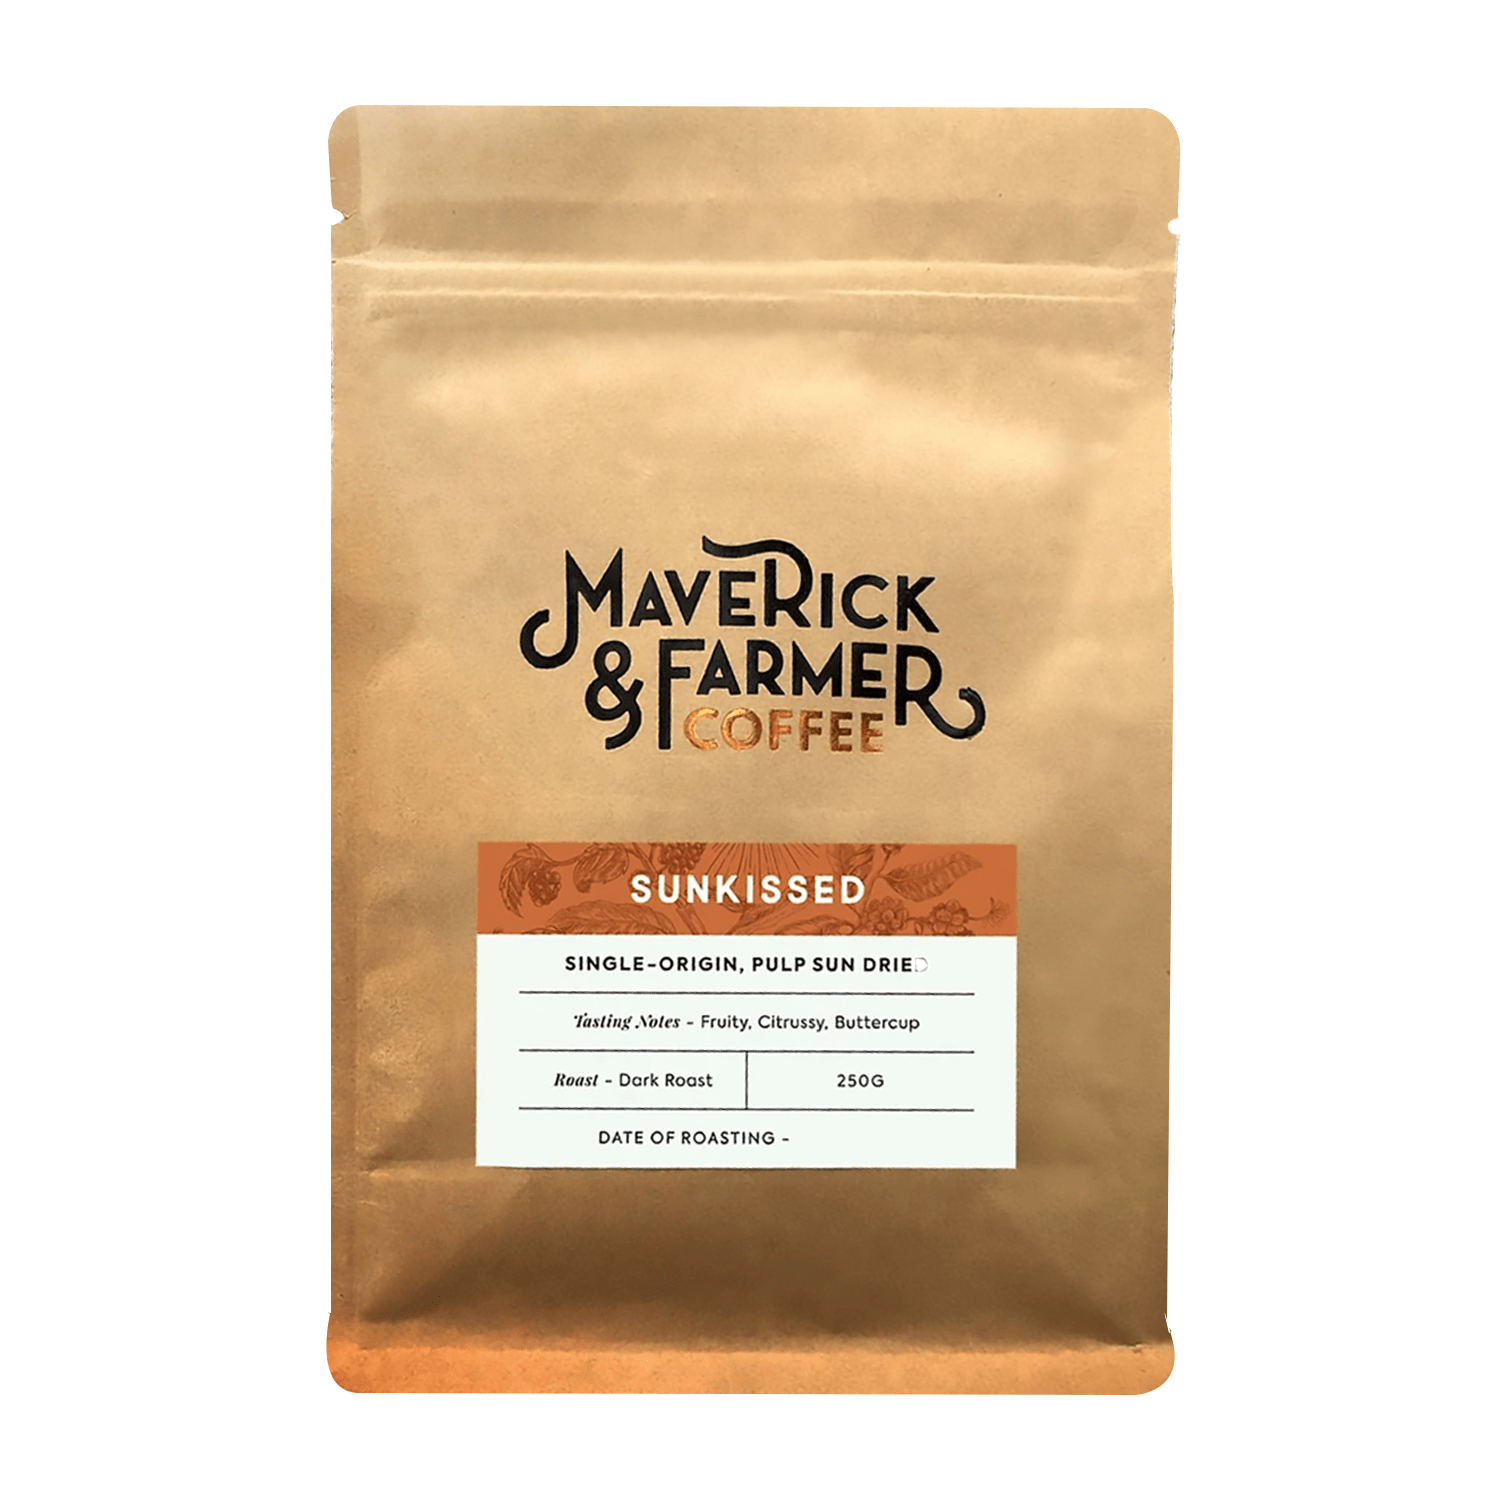 Mavekick & Farmer Ground And Whole Coffee Maverick & Farmer Sunkissed - Pulp Sundried